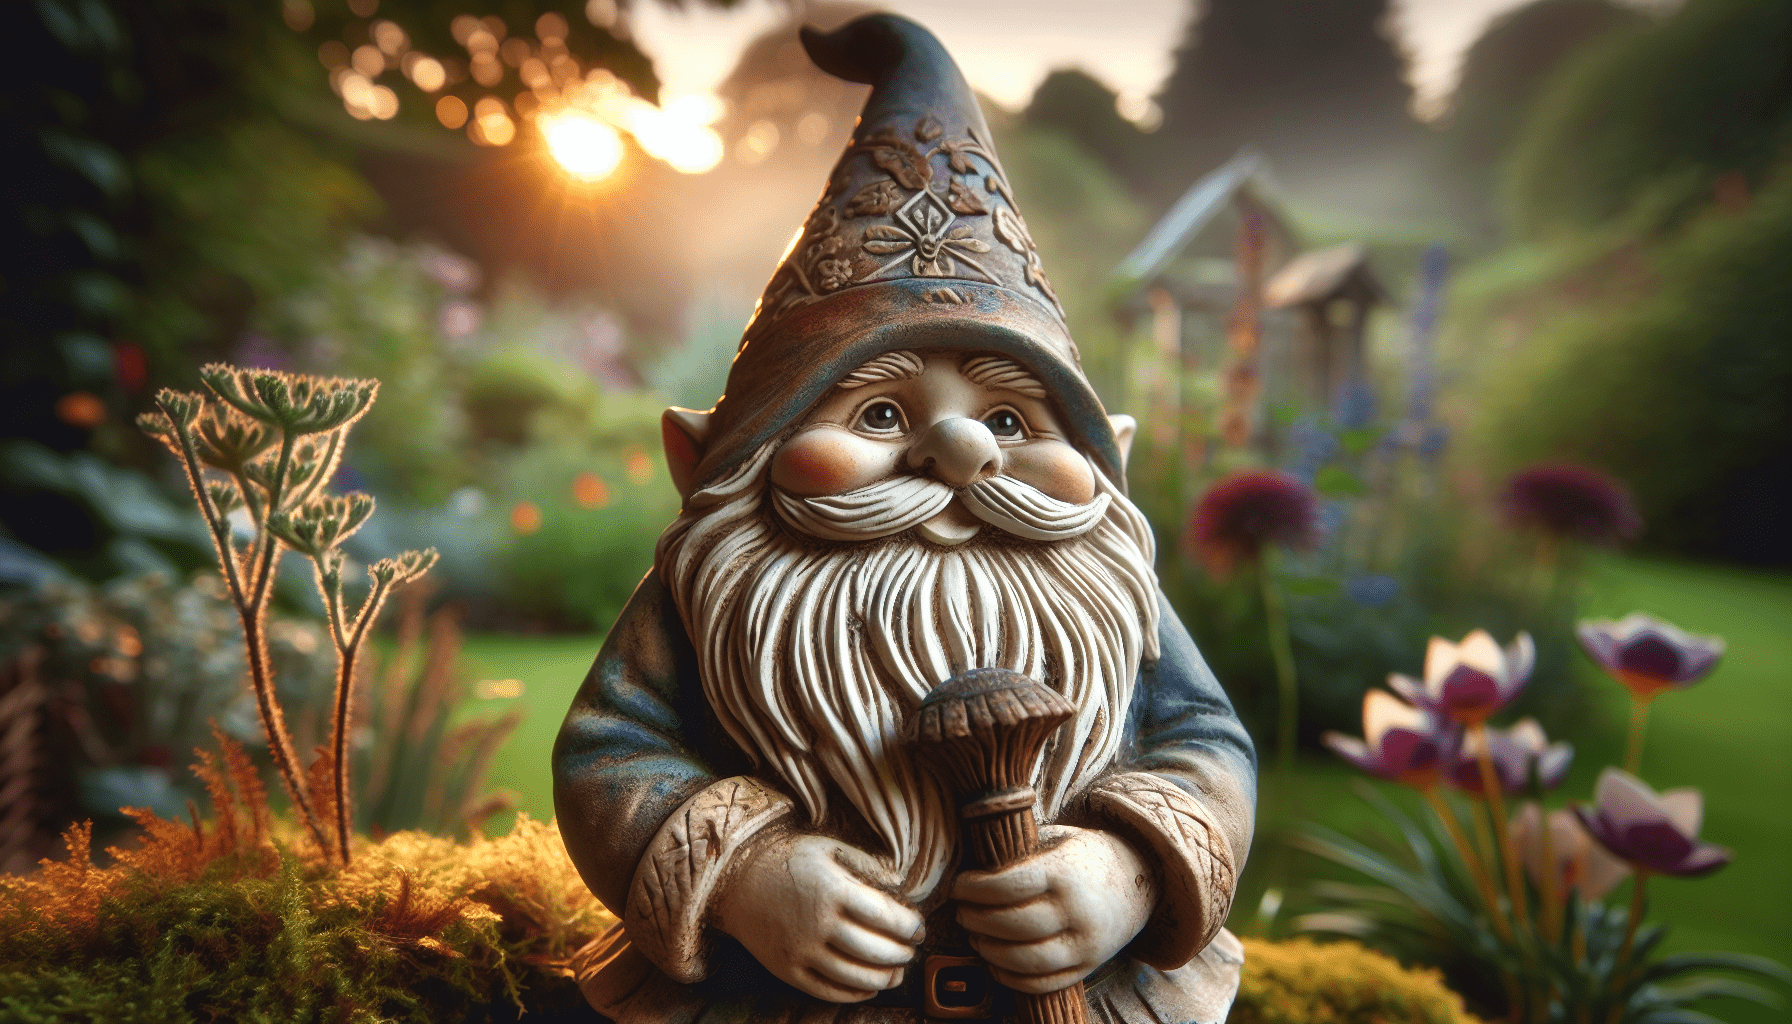 Garden Gnomes,Outdoor Decorations,Traditional Art,Symbolism Behind Garden Gnomes